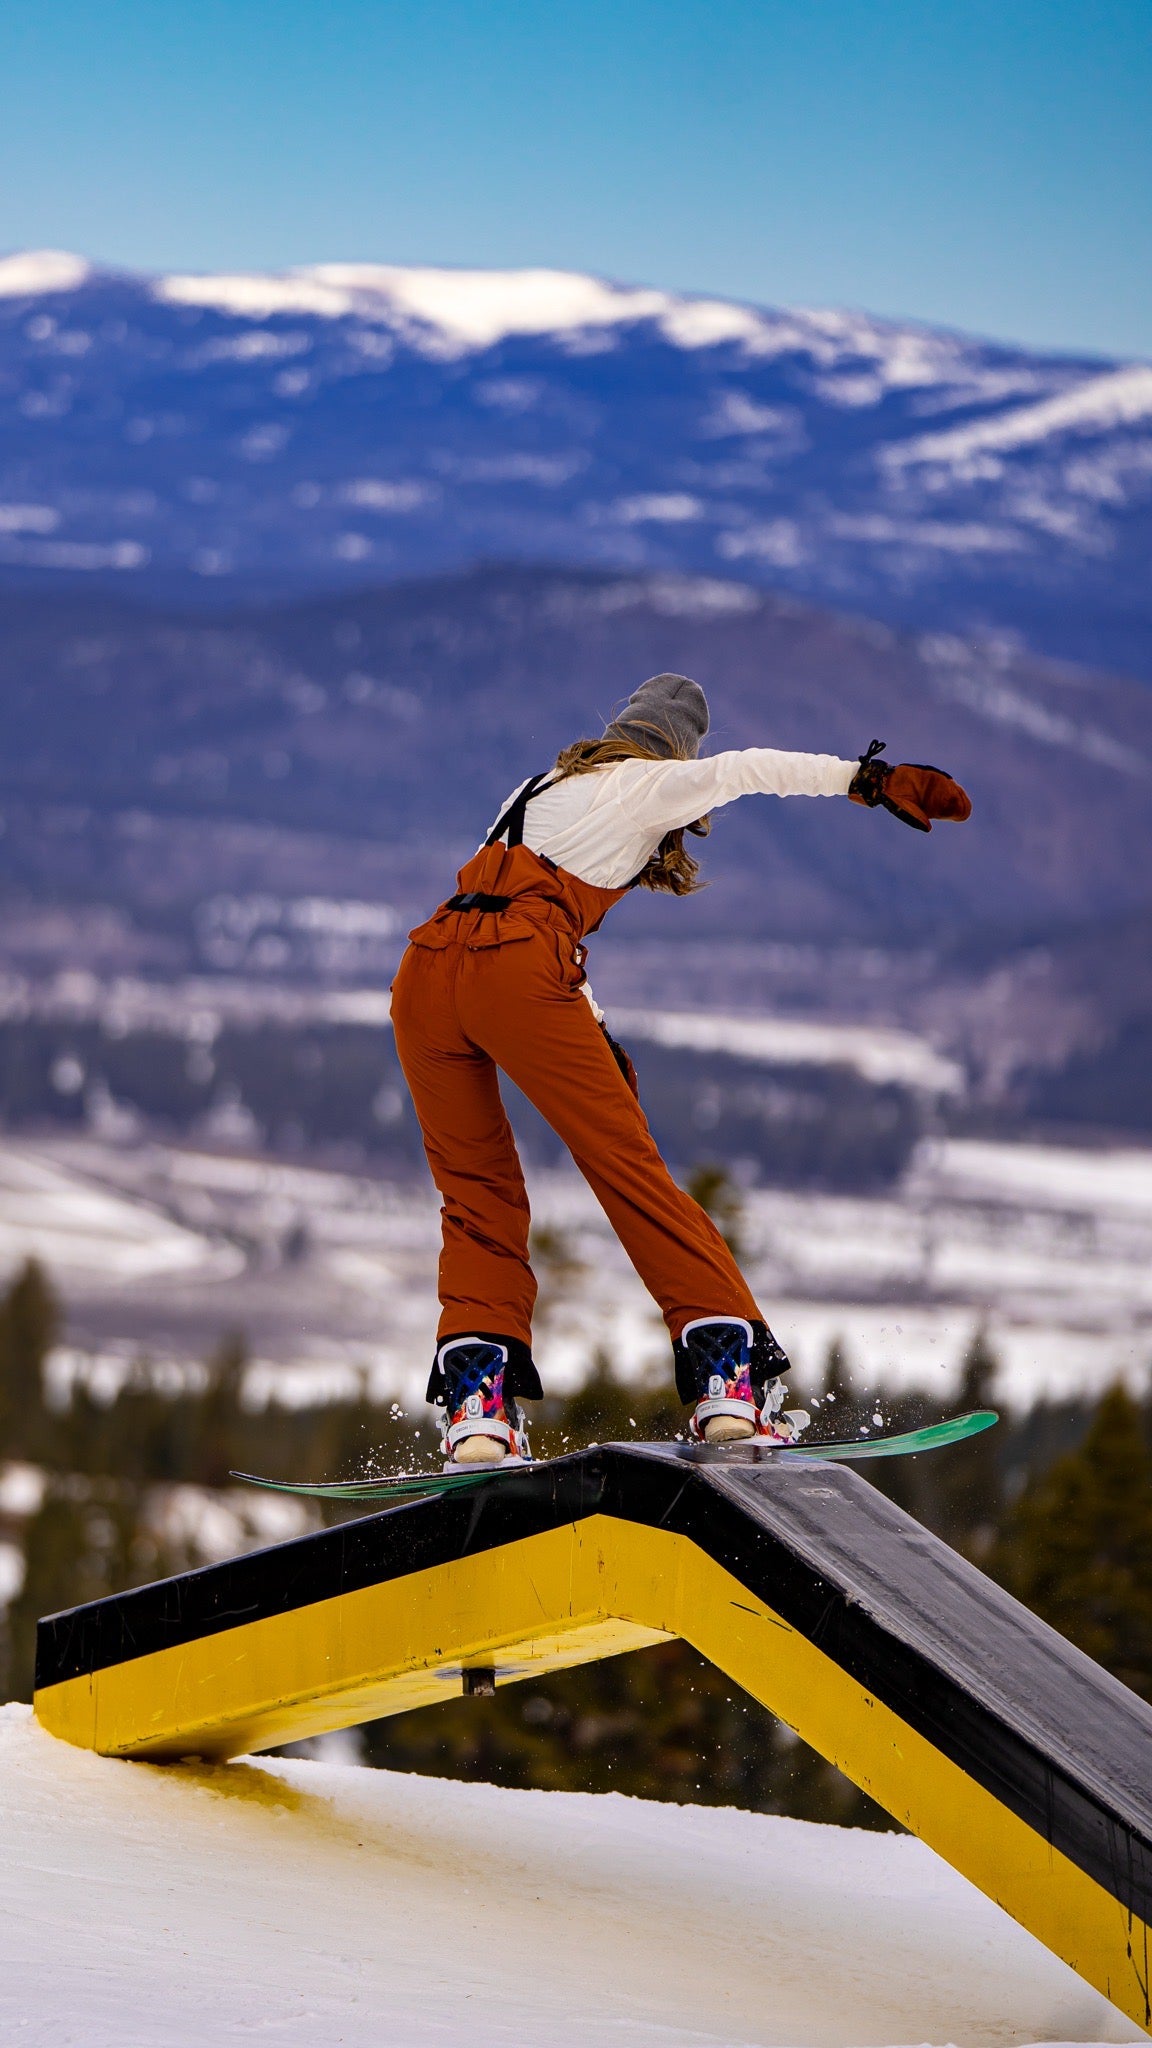 Bib belt on girl snowboarding in park